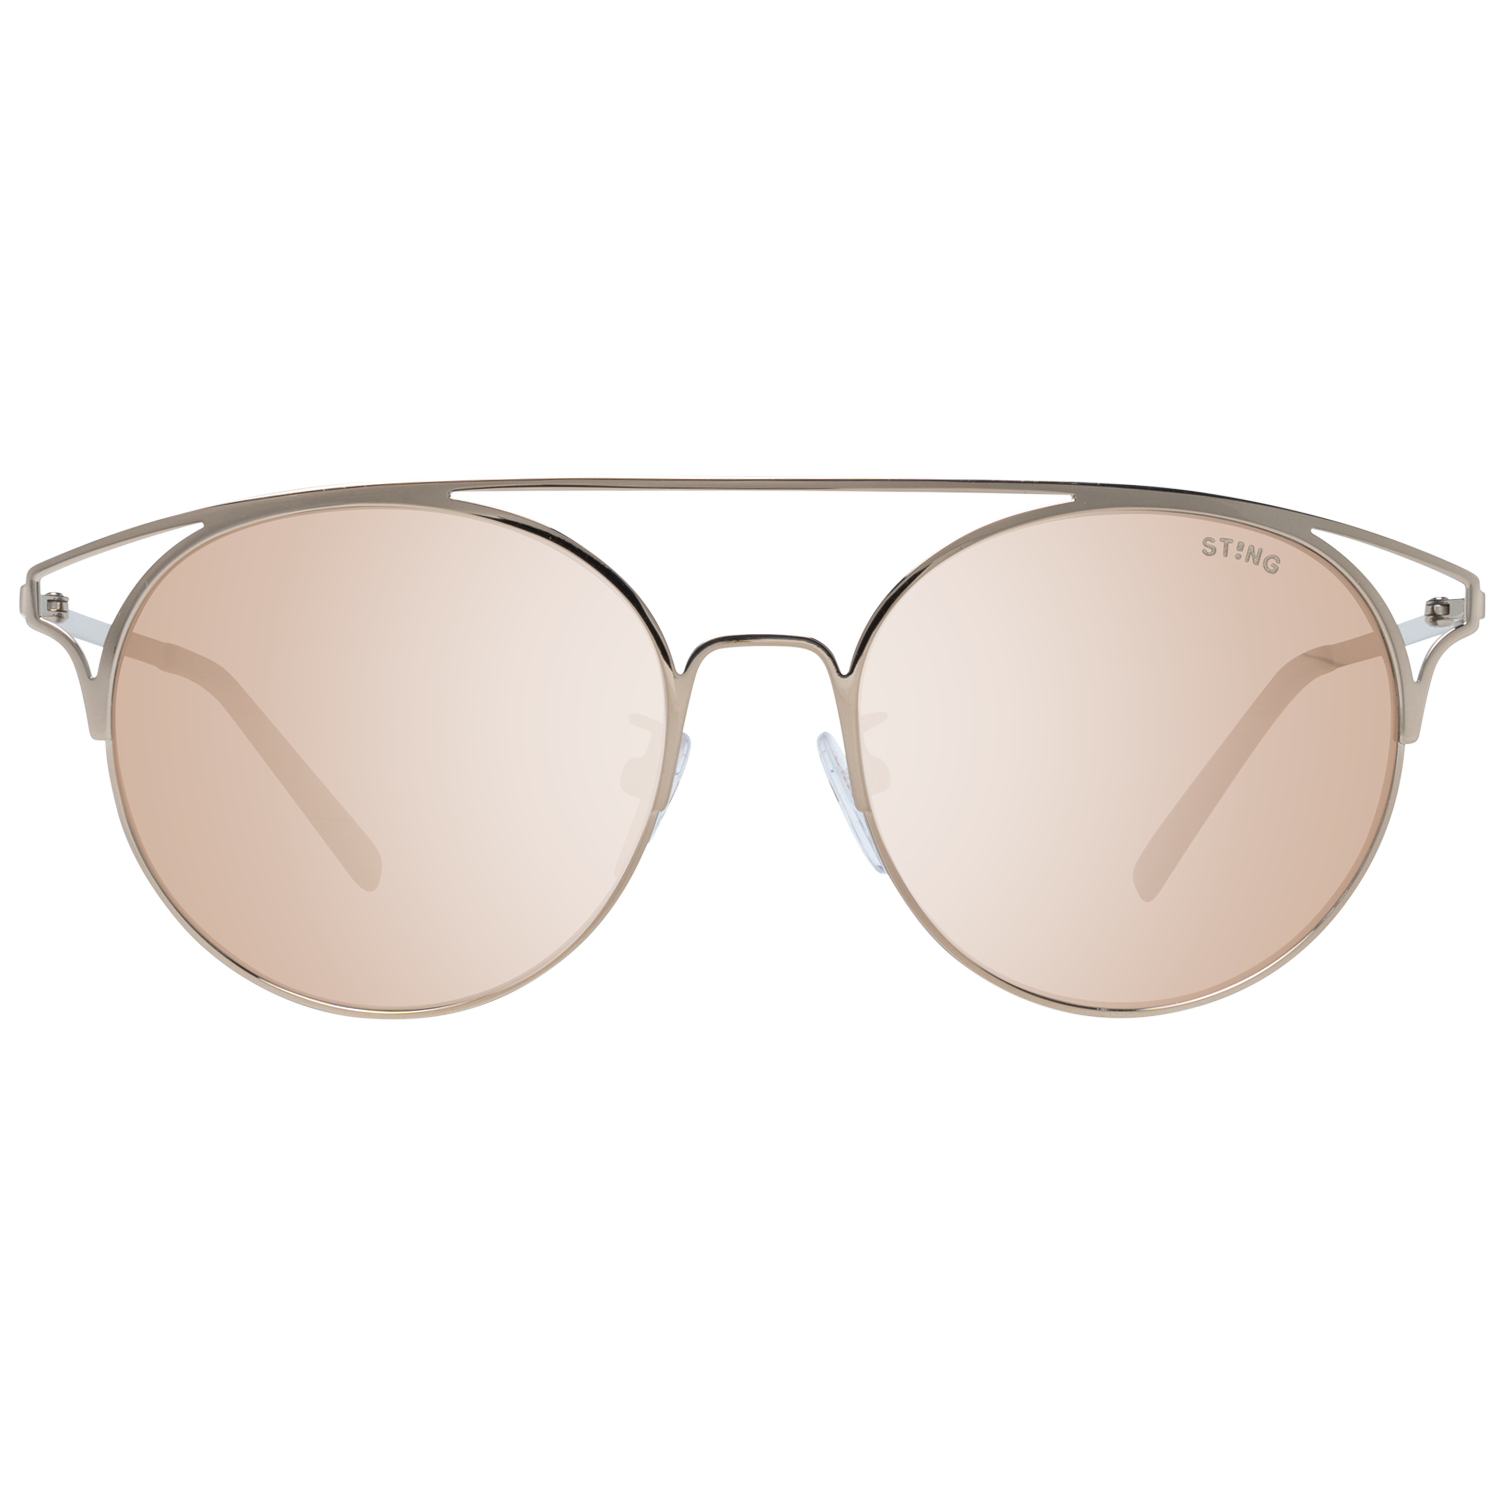 Sting Sunglasses Sting Sunglasses SST134 8FFG 52 Eyeglasses Eyewear UK USA Australia 